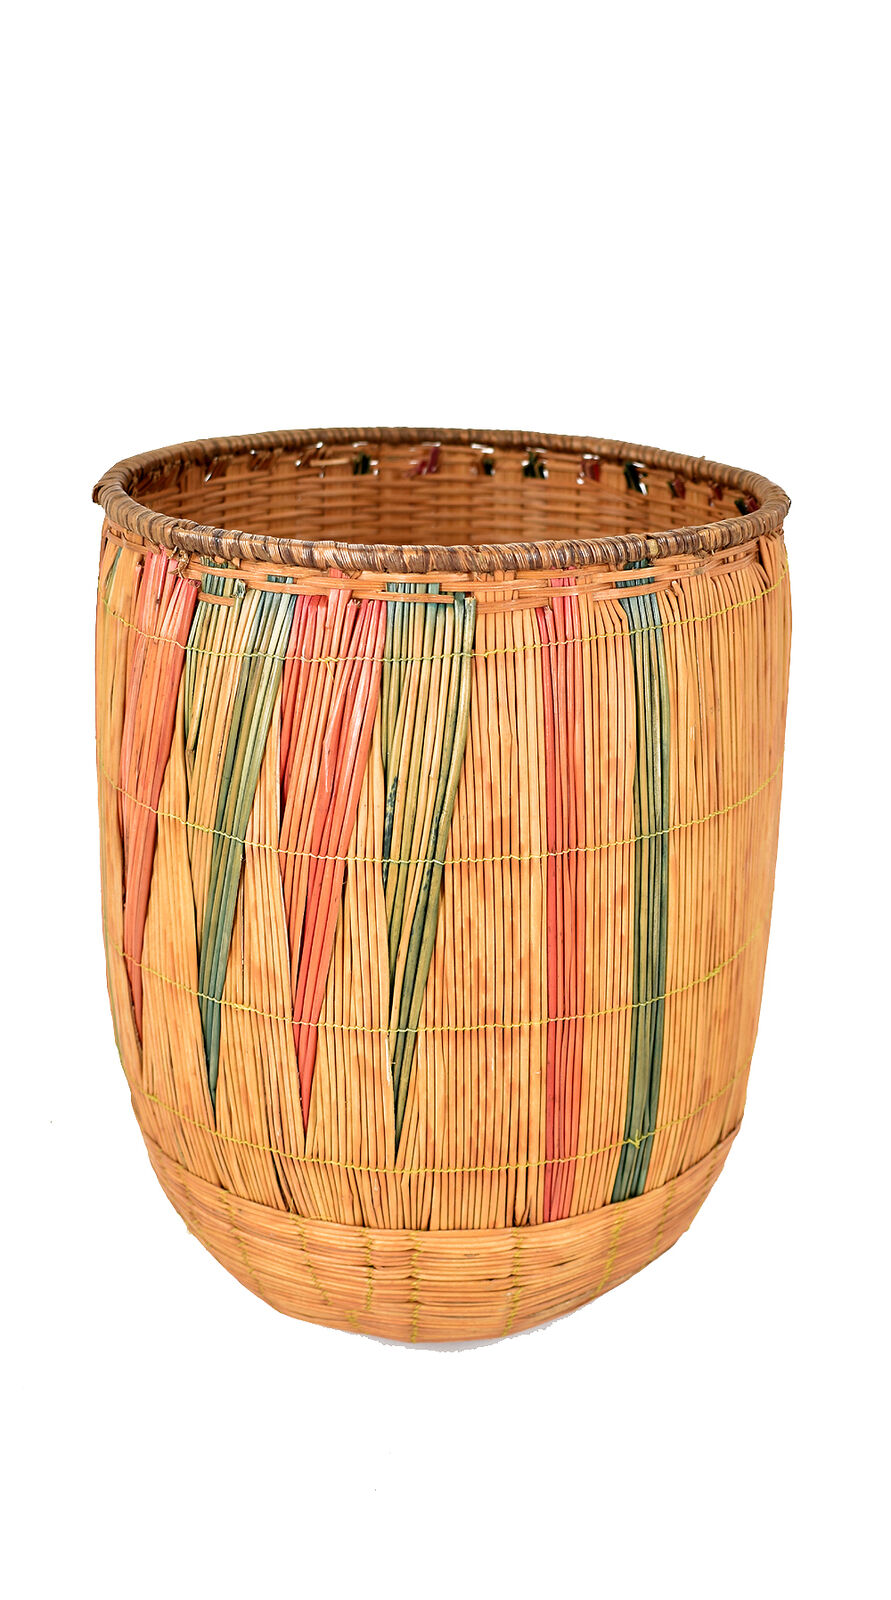 Tutsi Basket Unlidded Rwanda Old African Art